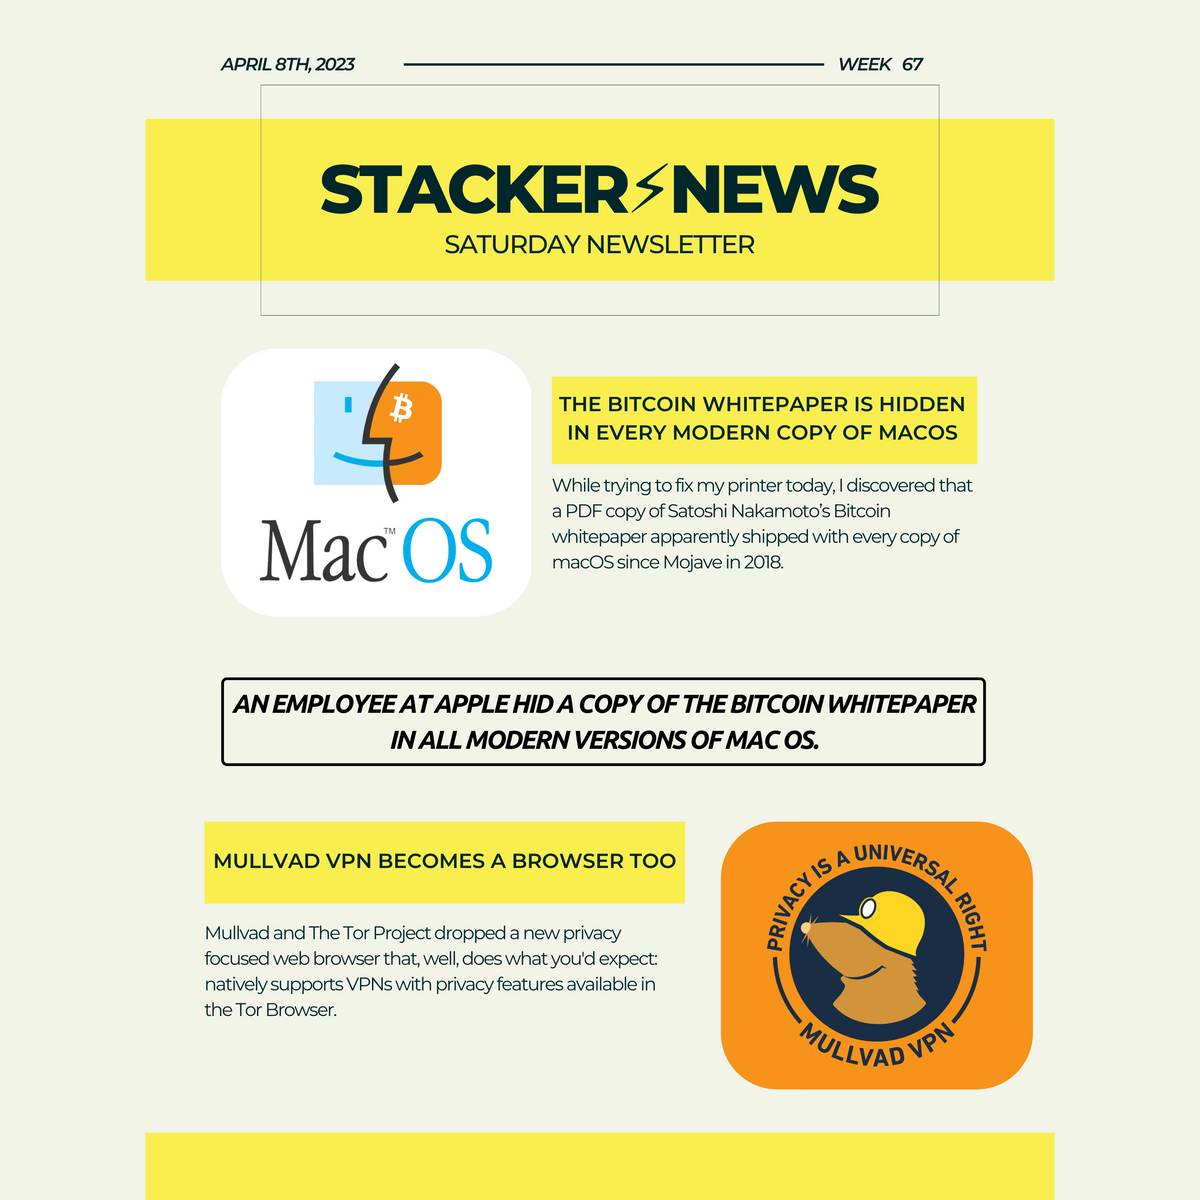 "macOS BTC" - Stacker News Saturday Newsletter